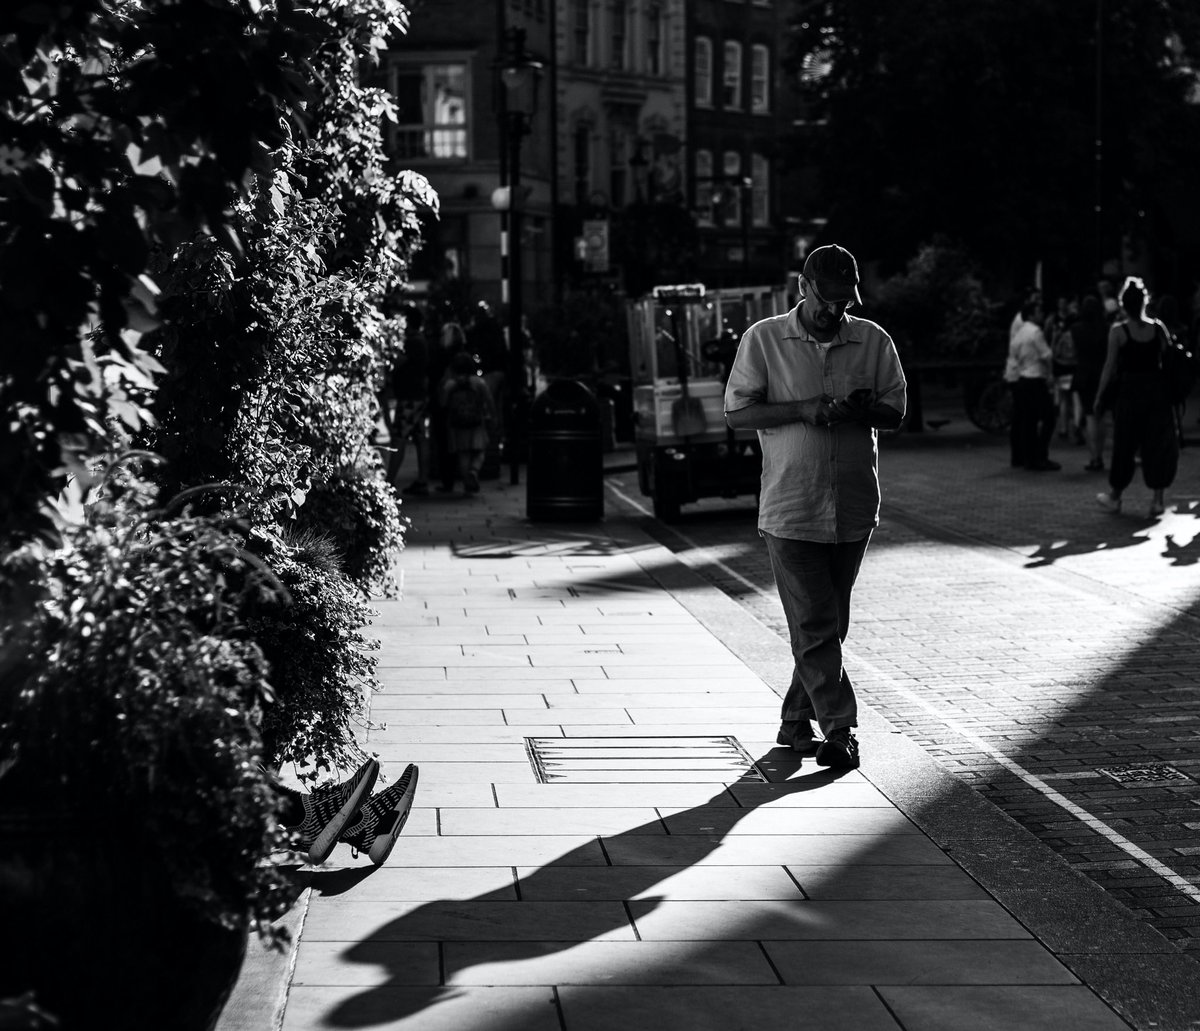 Feet up 👟

#streetphotography #lifeisstreet #streetdreams #bnwphotography #bnwphoto #londonstreets #ihsp